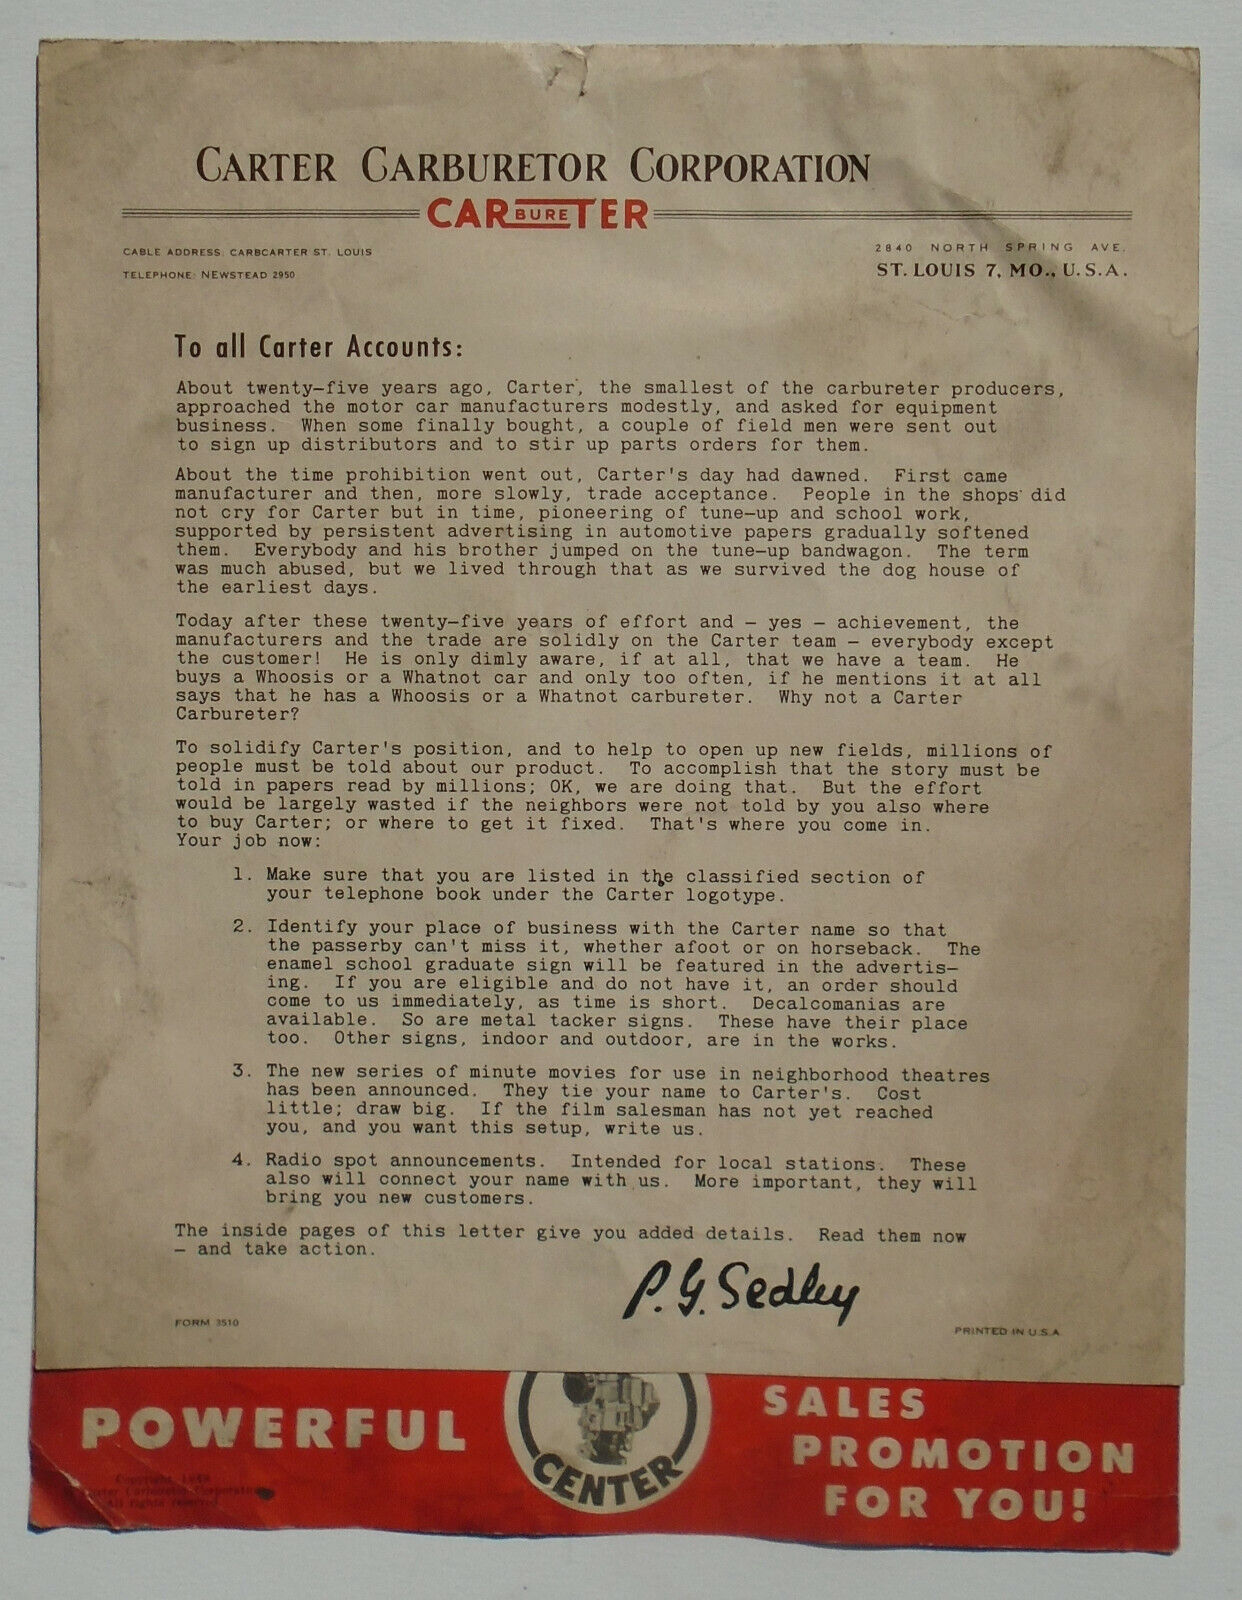 Carter Carburetor 1948 National Advertising letter and poster